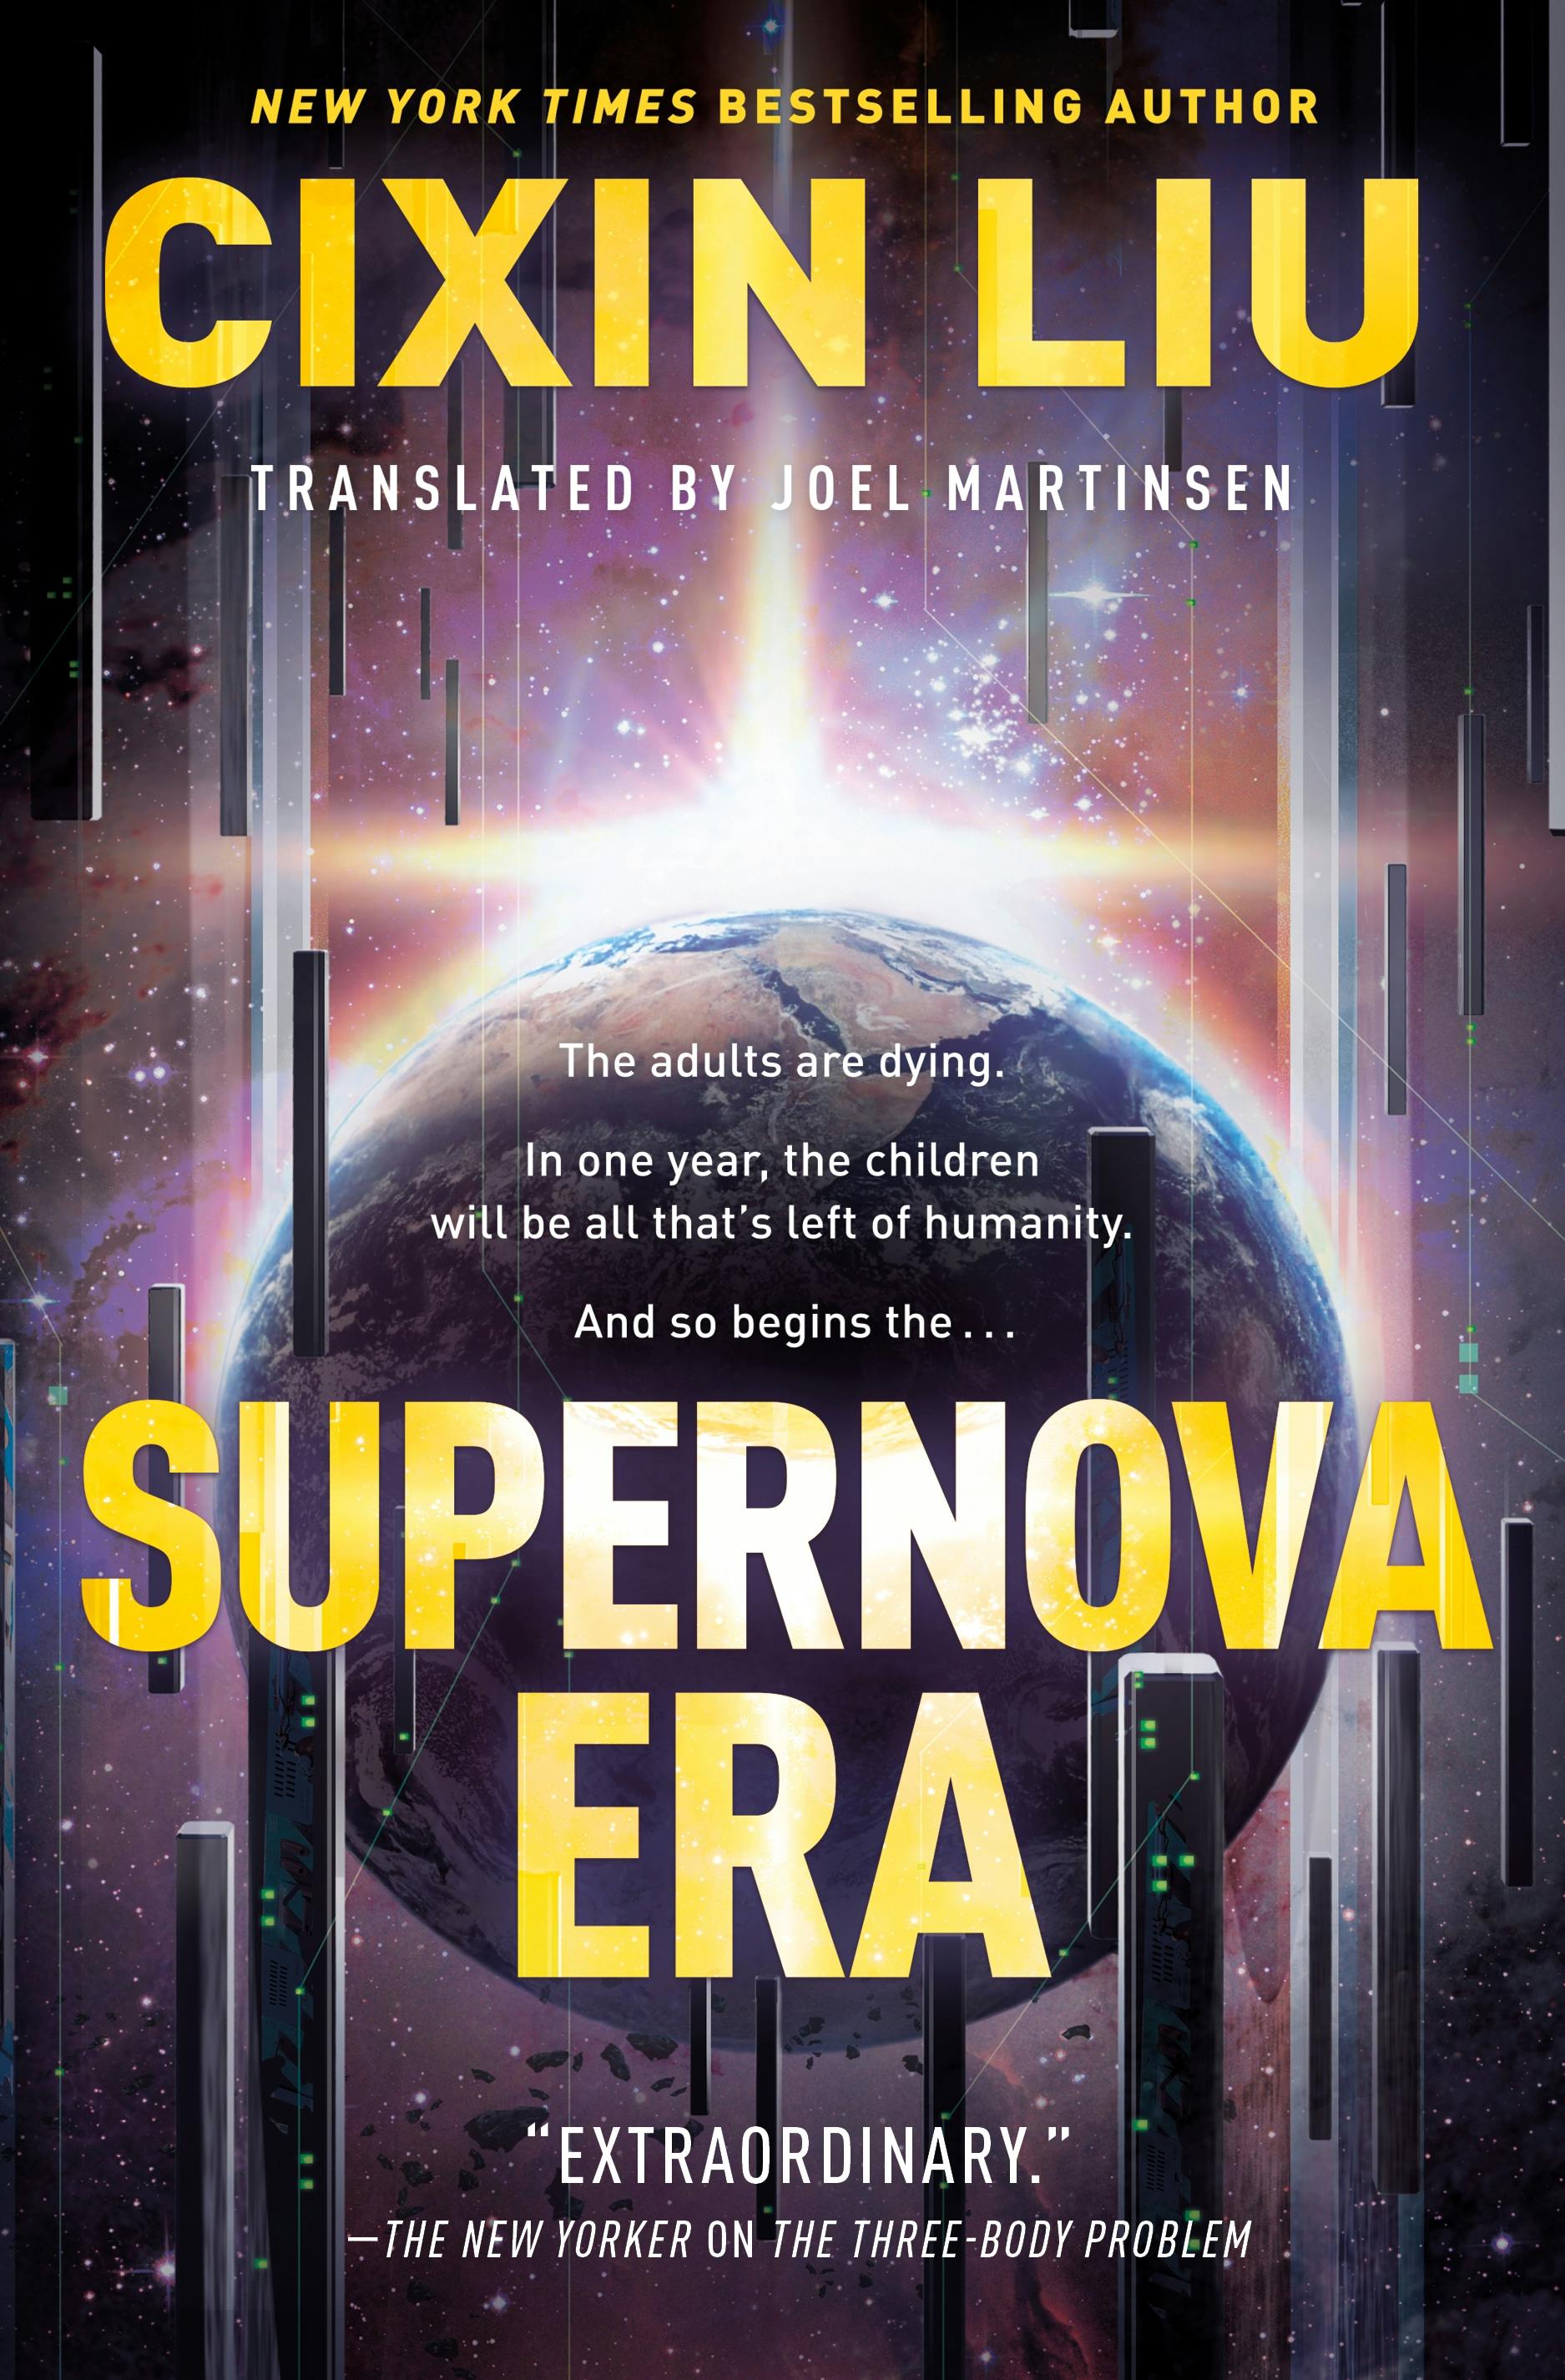 Cover for the book titled as: Supernova Era